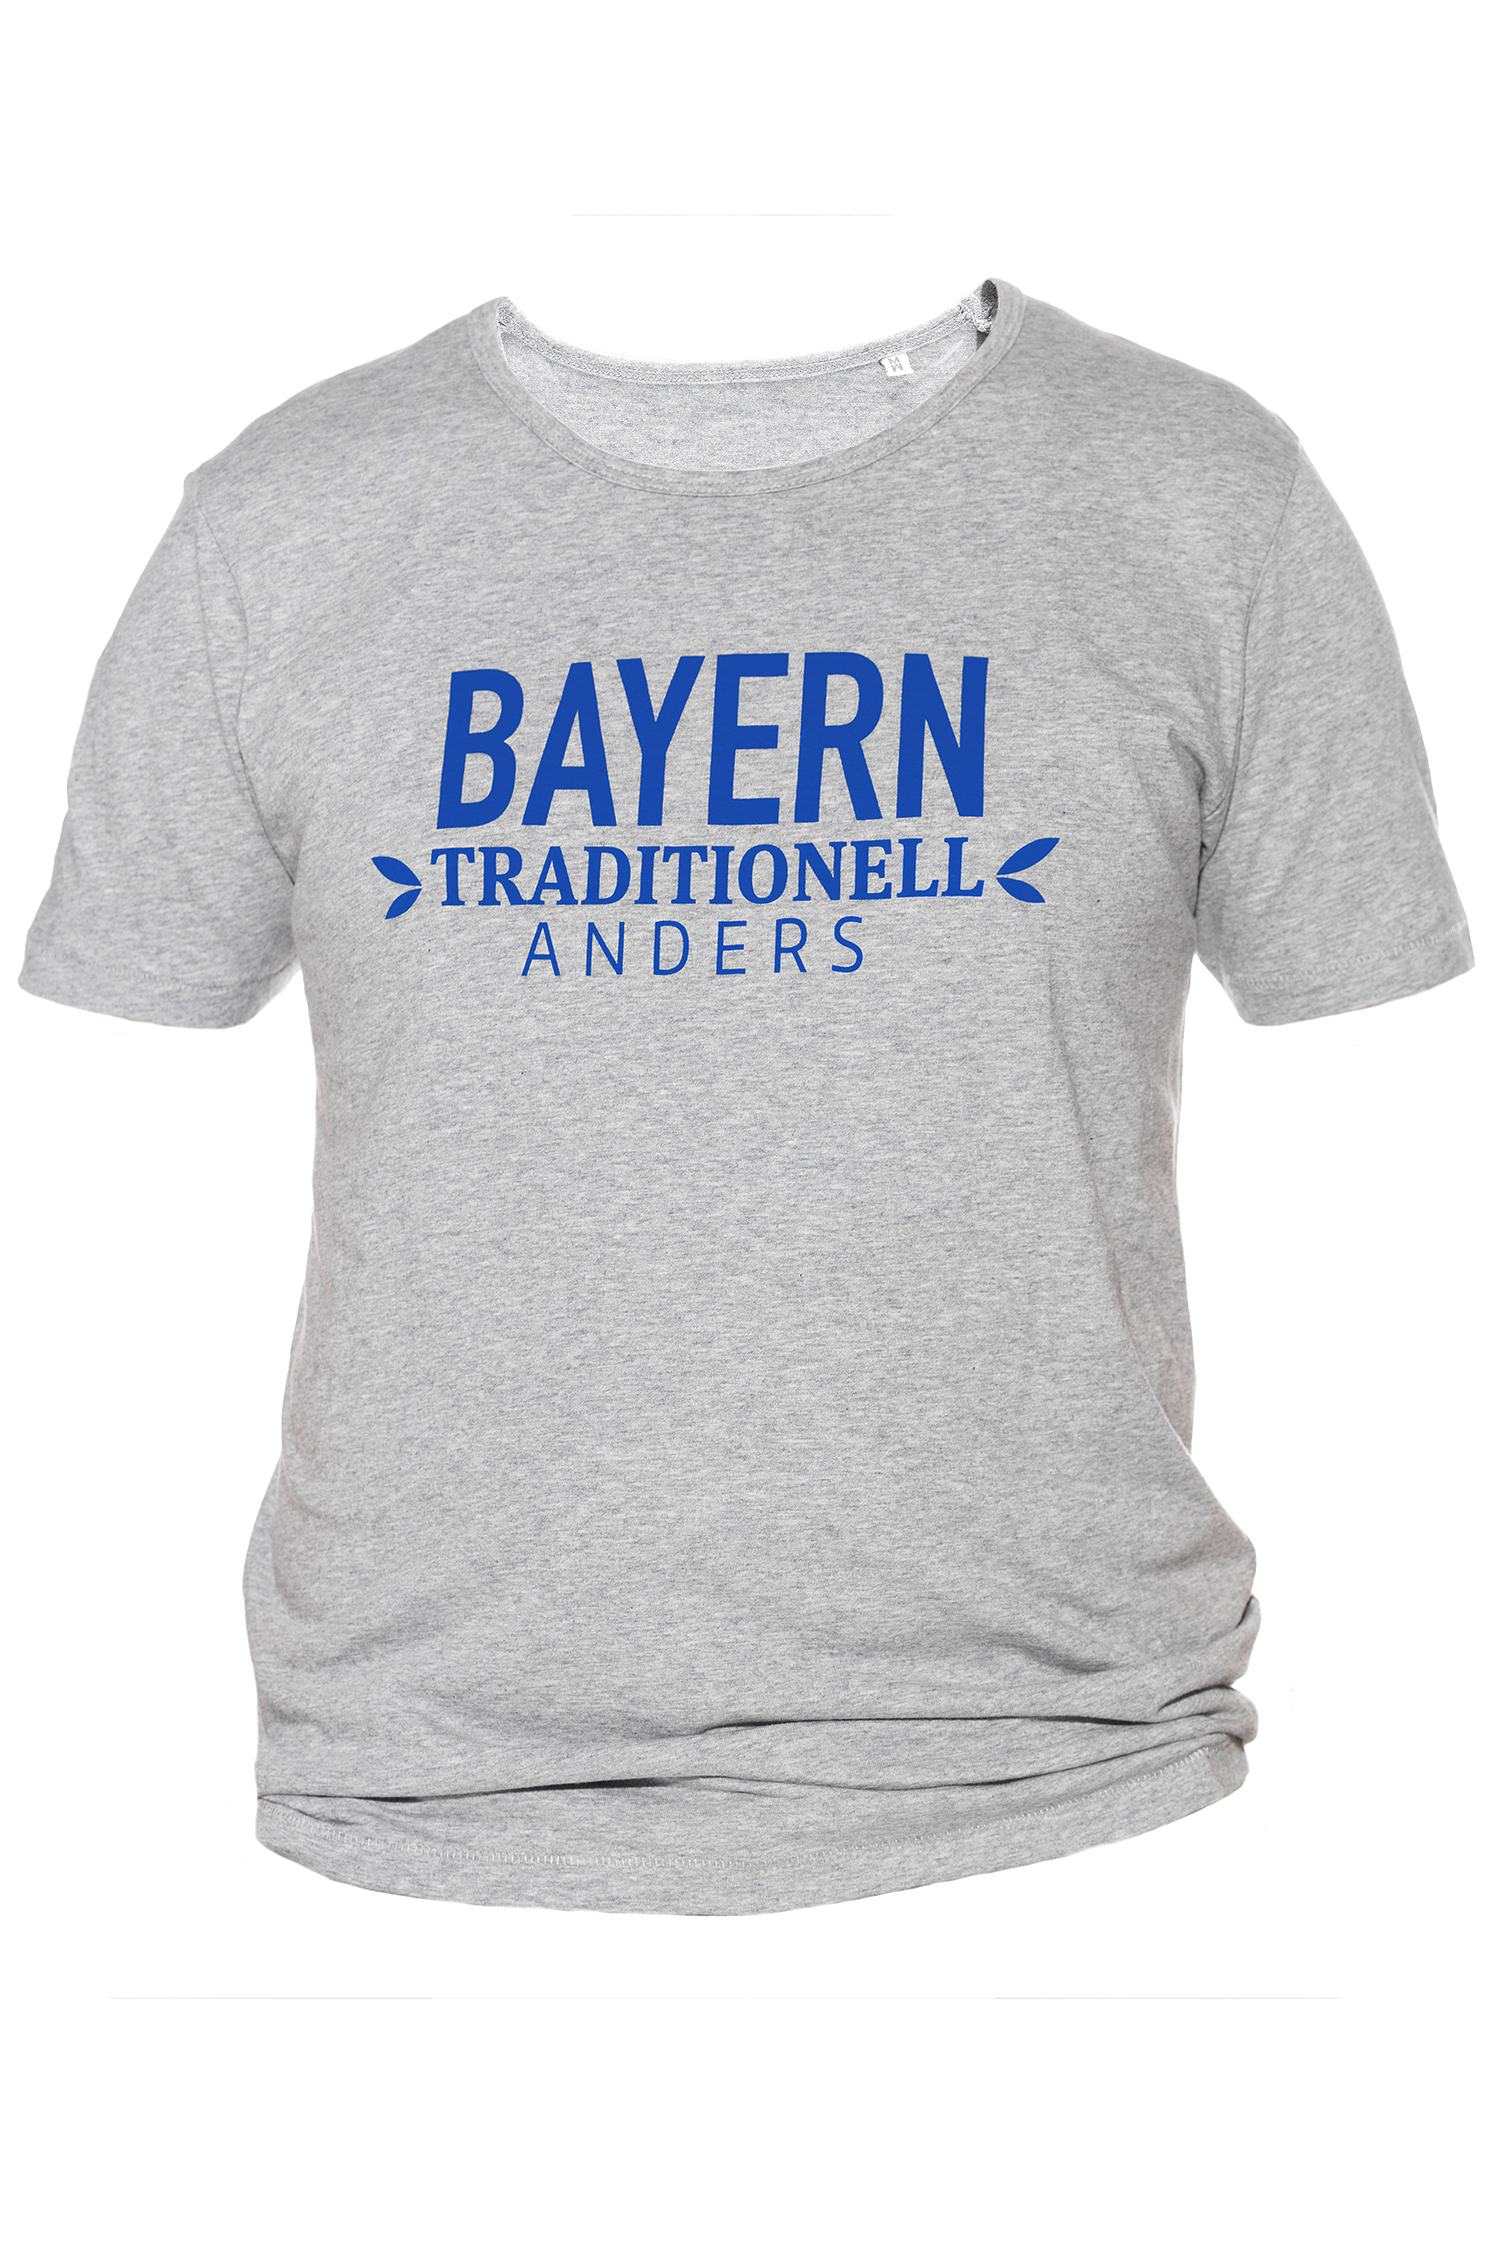 T-Shirt Bayern traditionell anders S | grau / blau